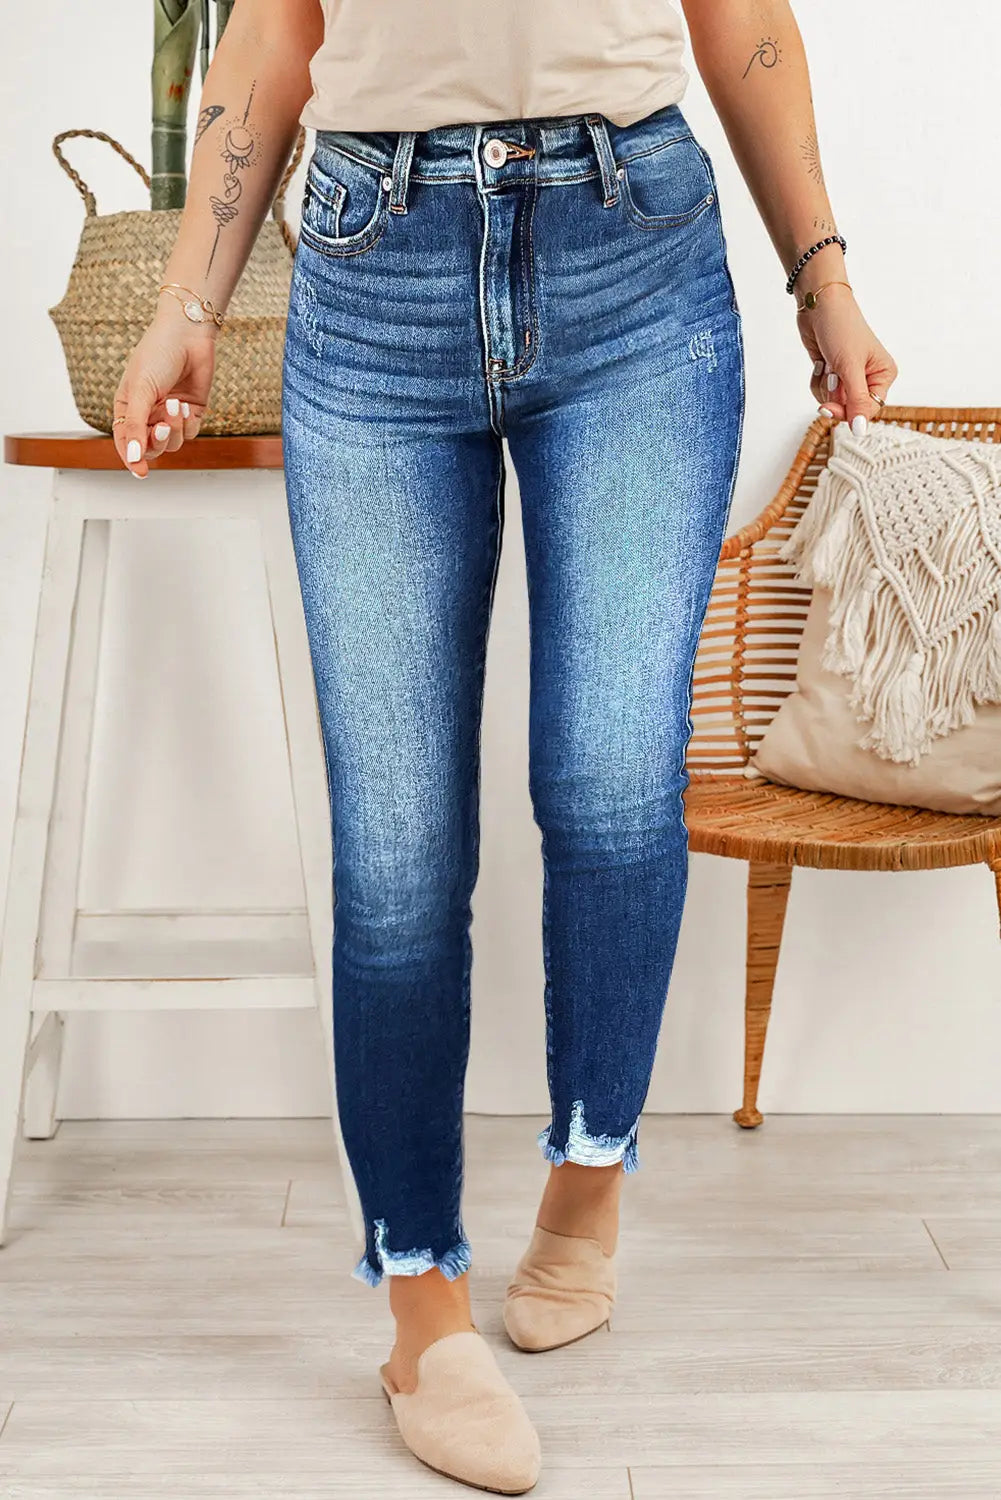 Blue raw hem ankle-length skinny jeans - 6 / 61% cotton + 33% polyester + 5% viscose + 1% elastane